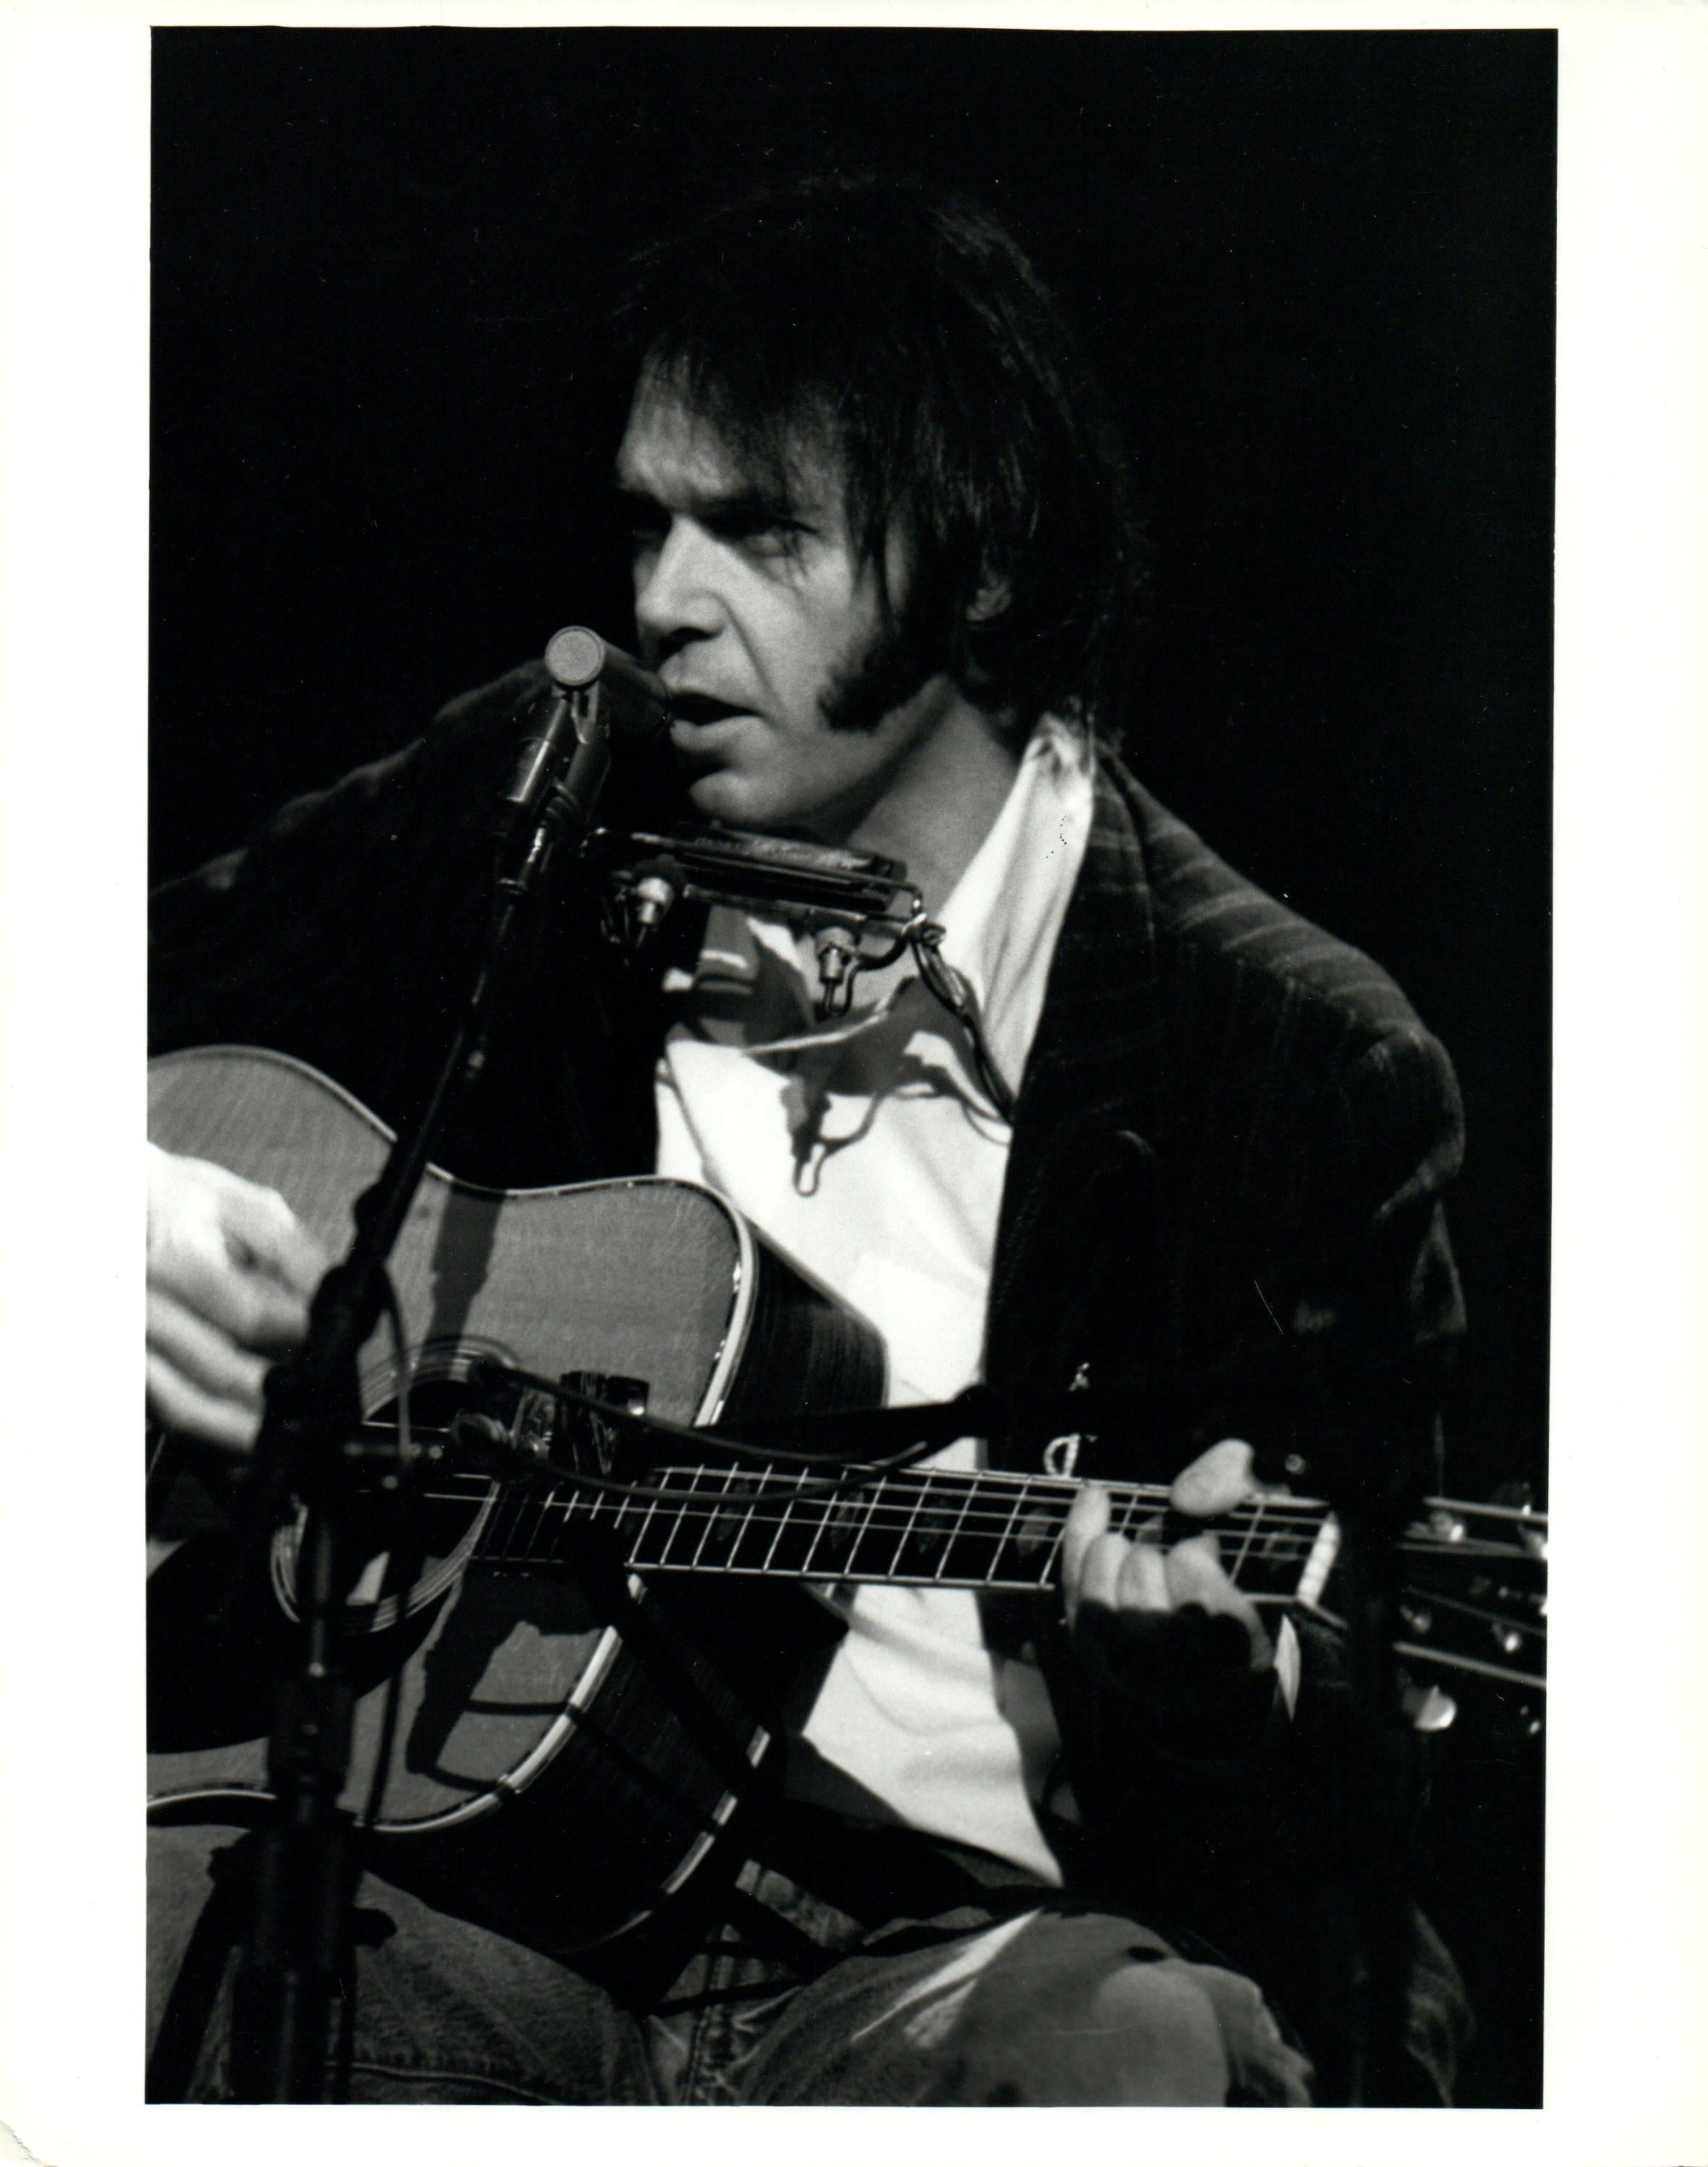 John Bellissimo Portrait Photograph - Neil Young With Guitar and Harmonica Vintage Original Photograph